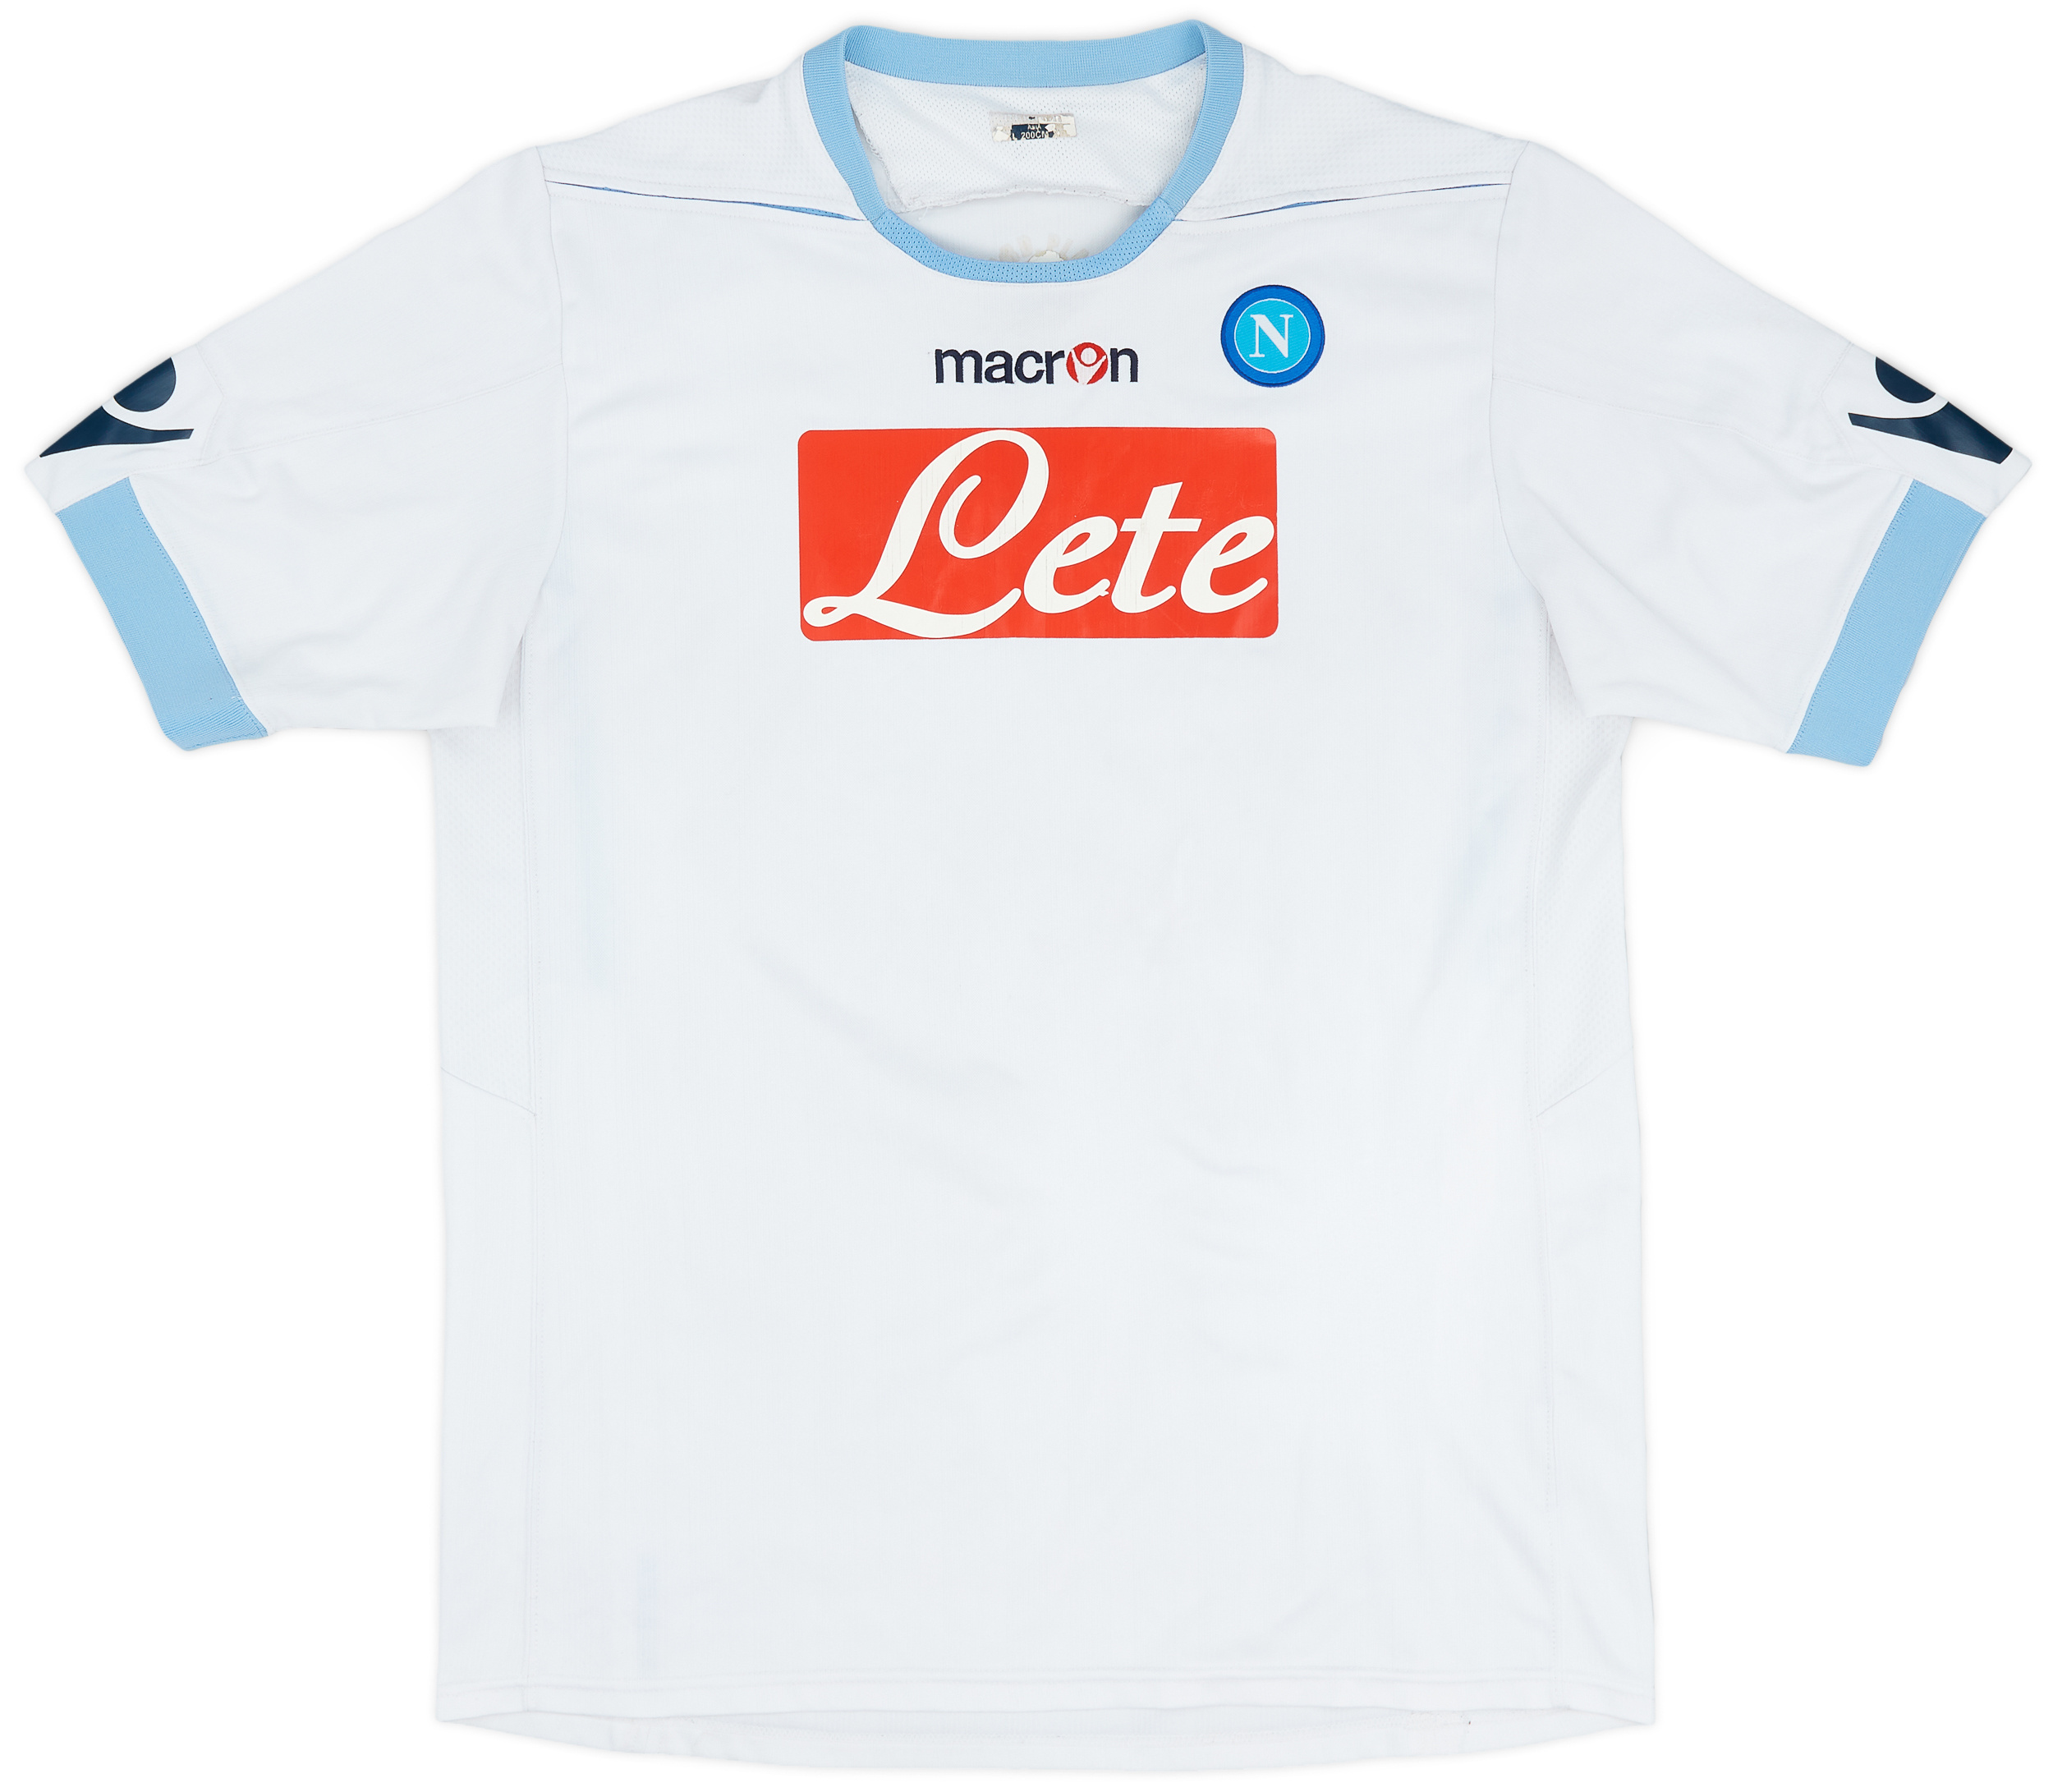 Napoli  Uit  shirt  (Original)